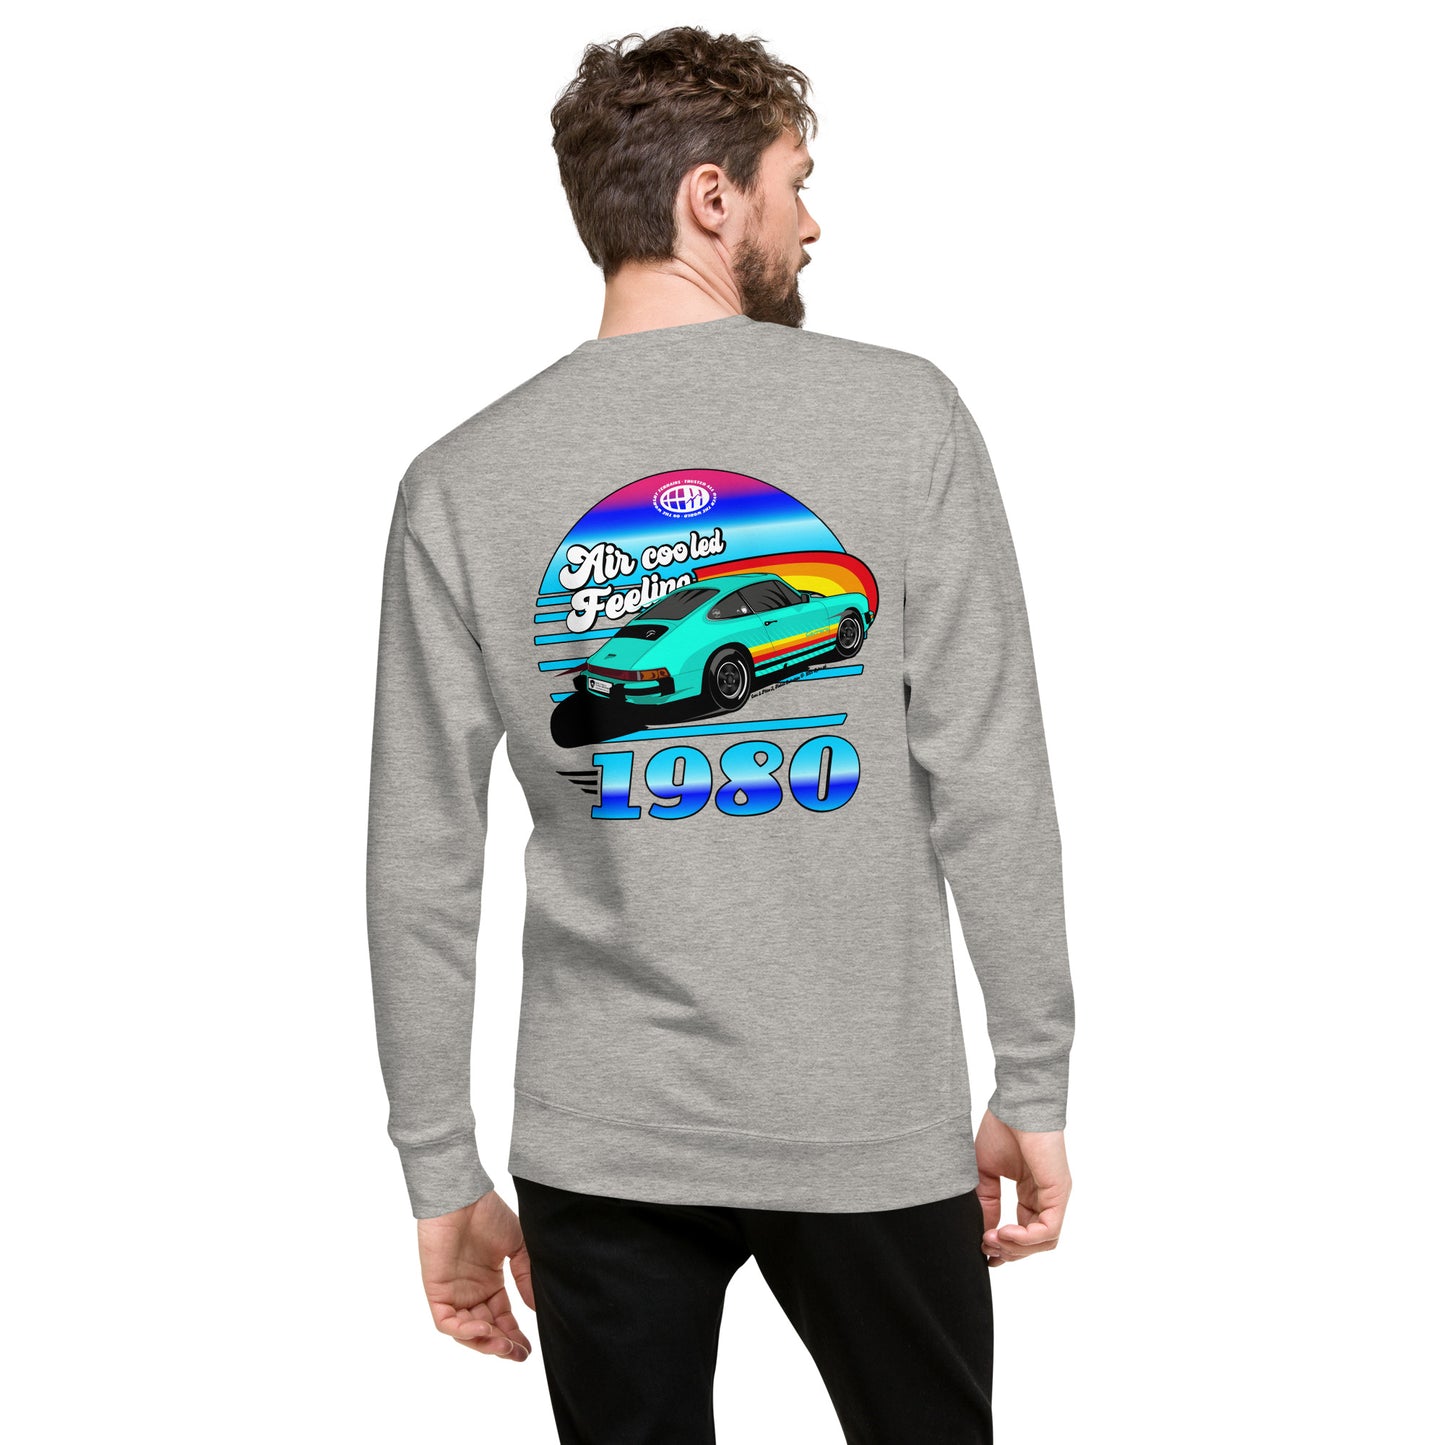 930 "Air Cooled Feeling" unisex sweatshirt